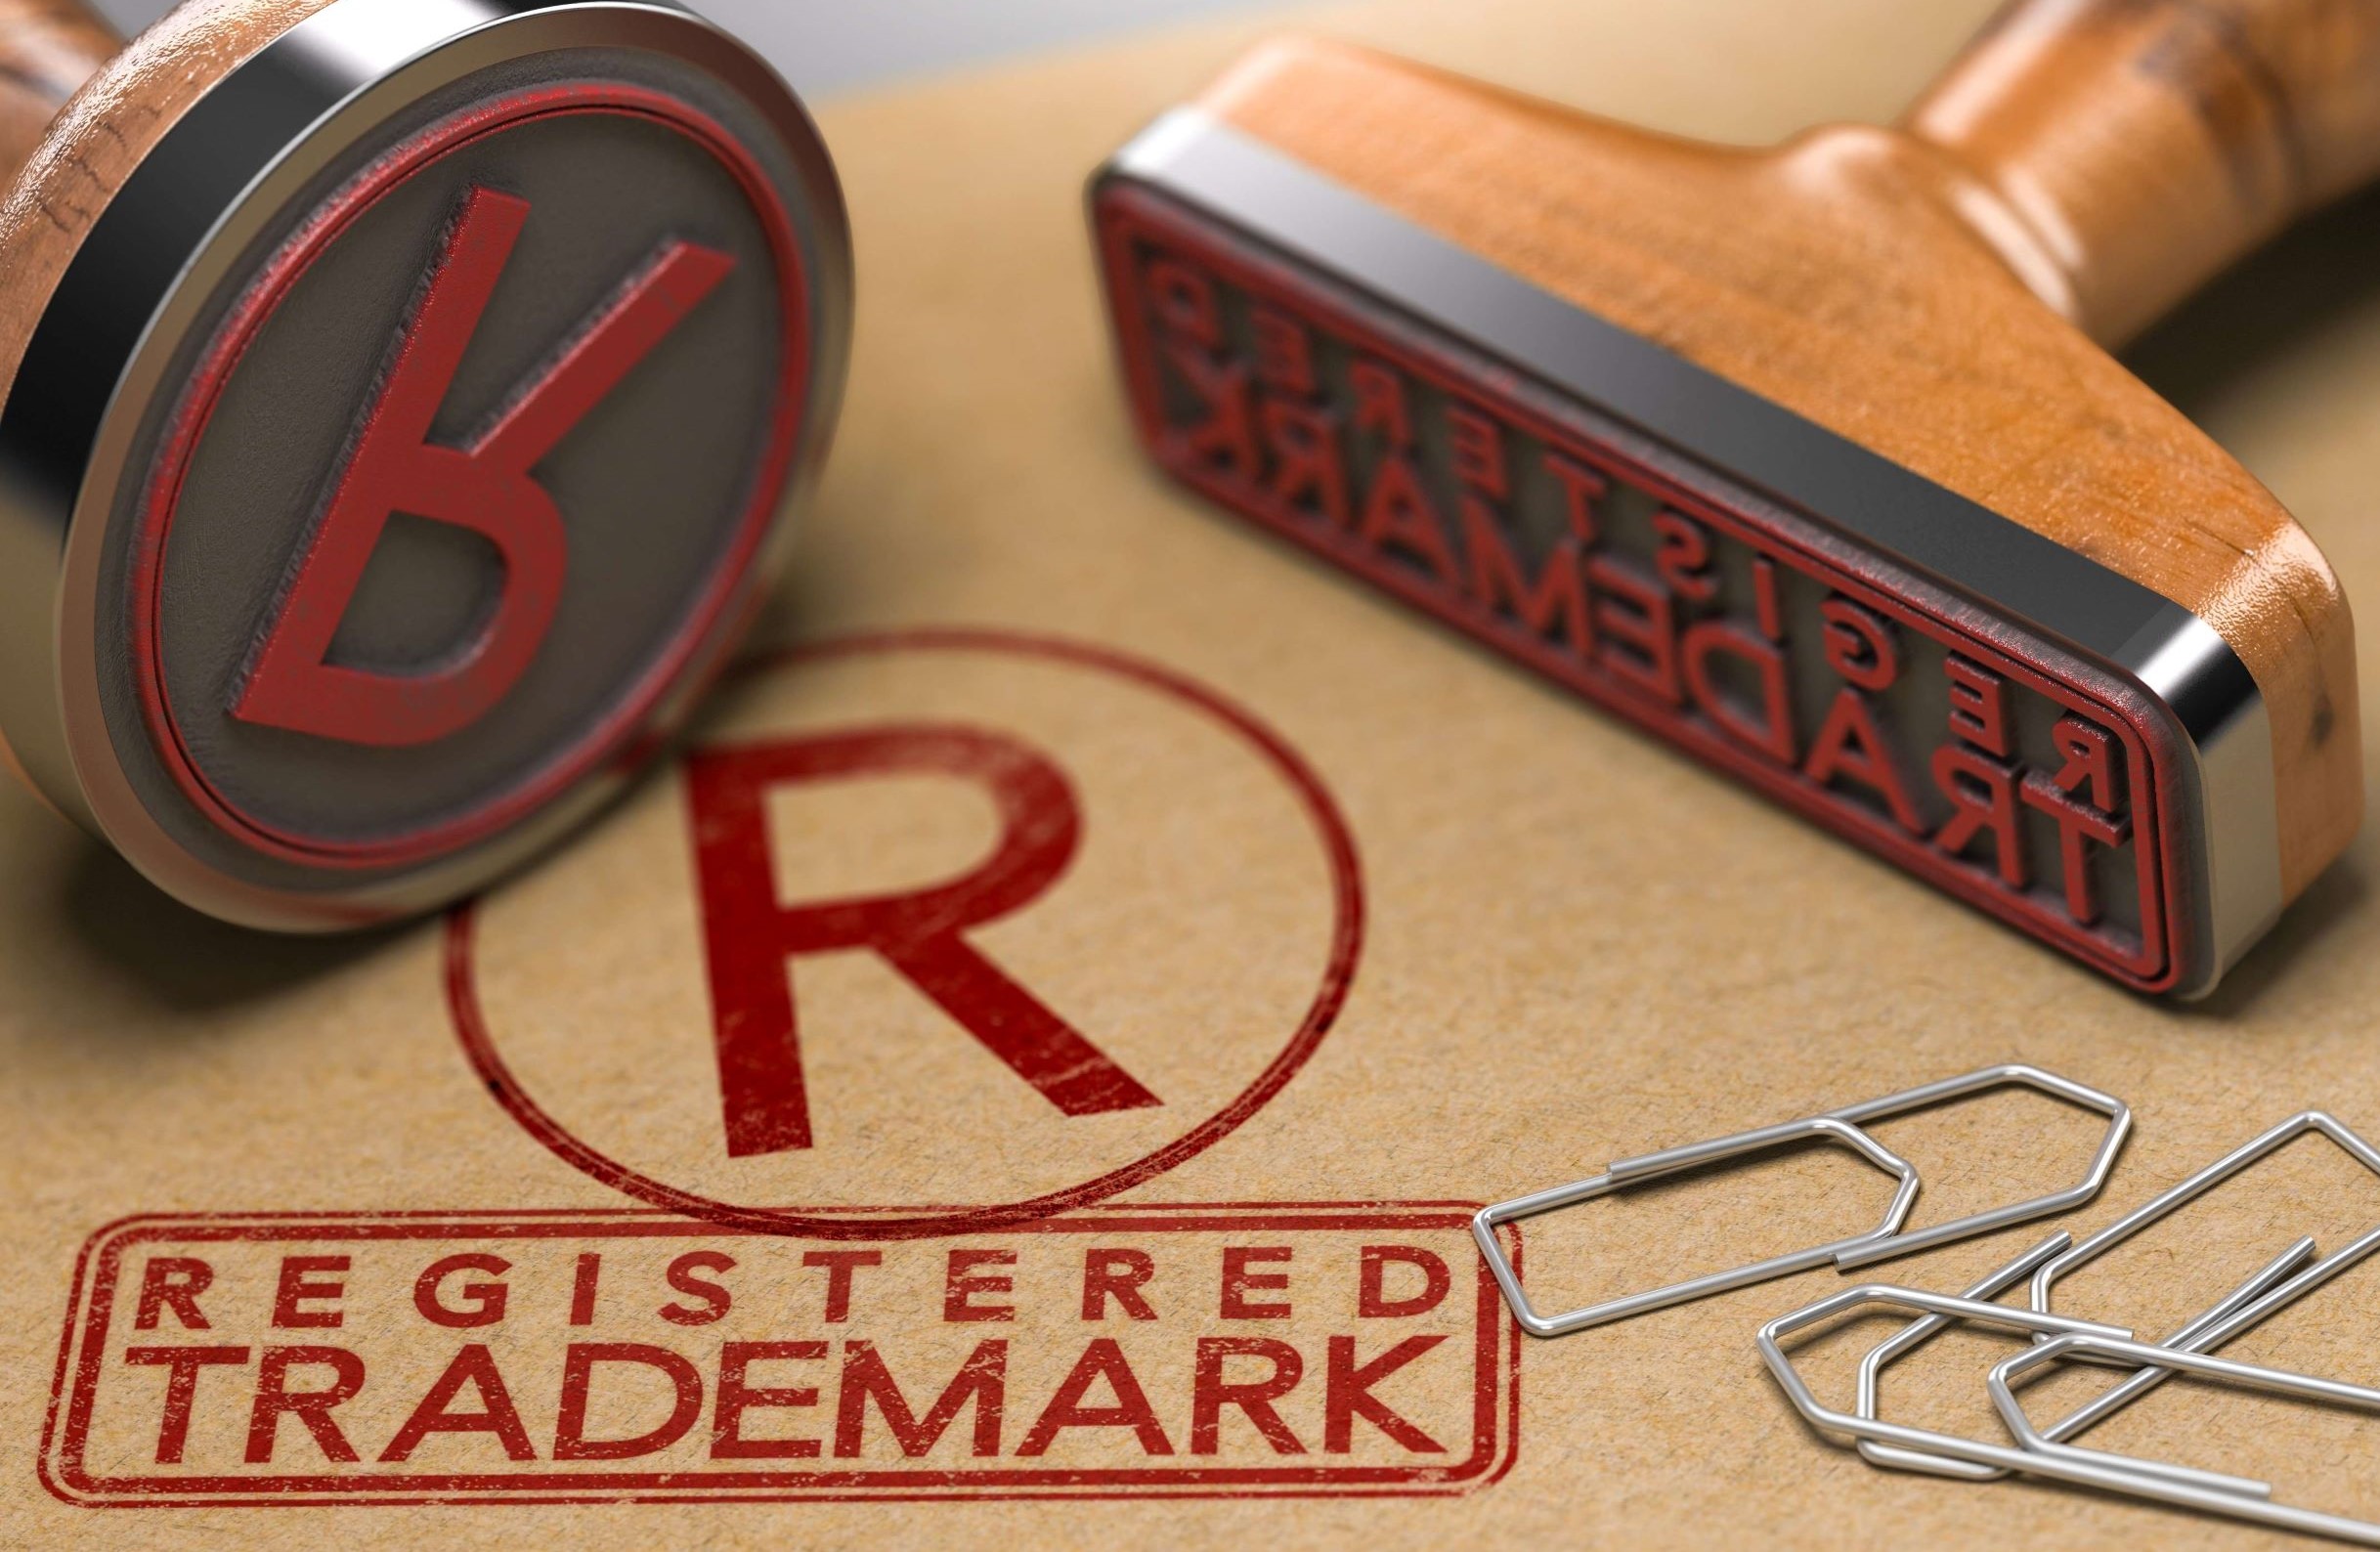 Registered Trademark Stamp and File